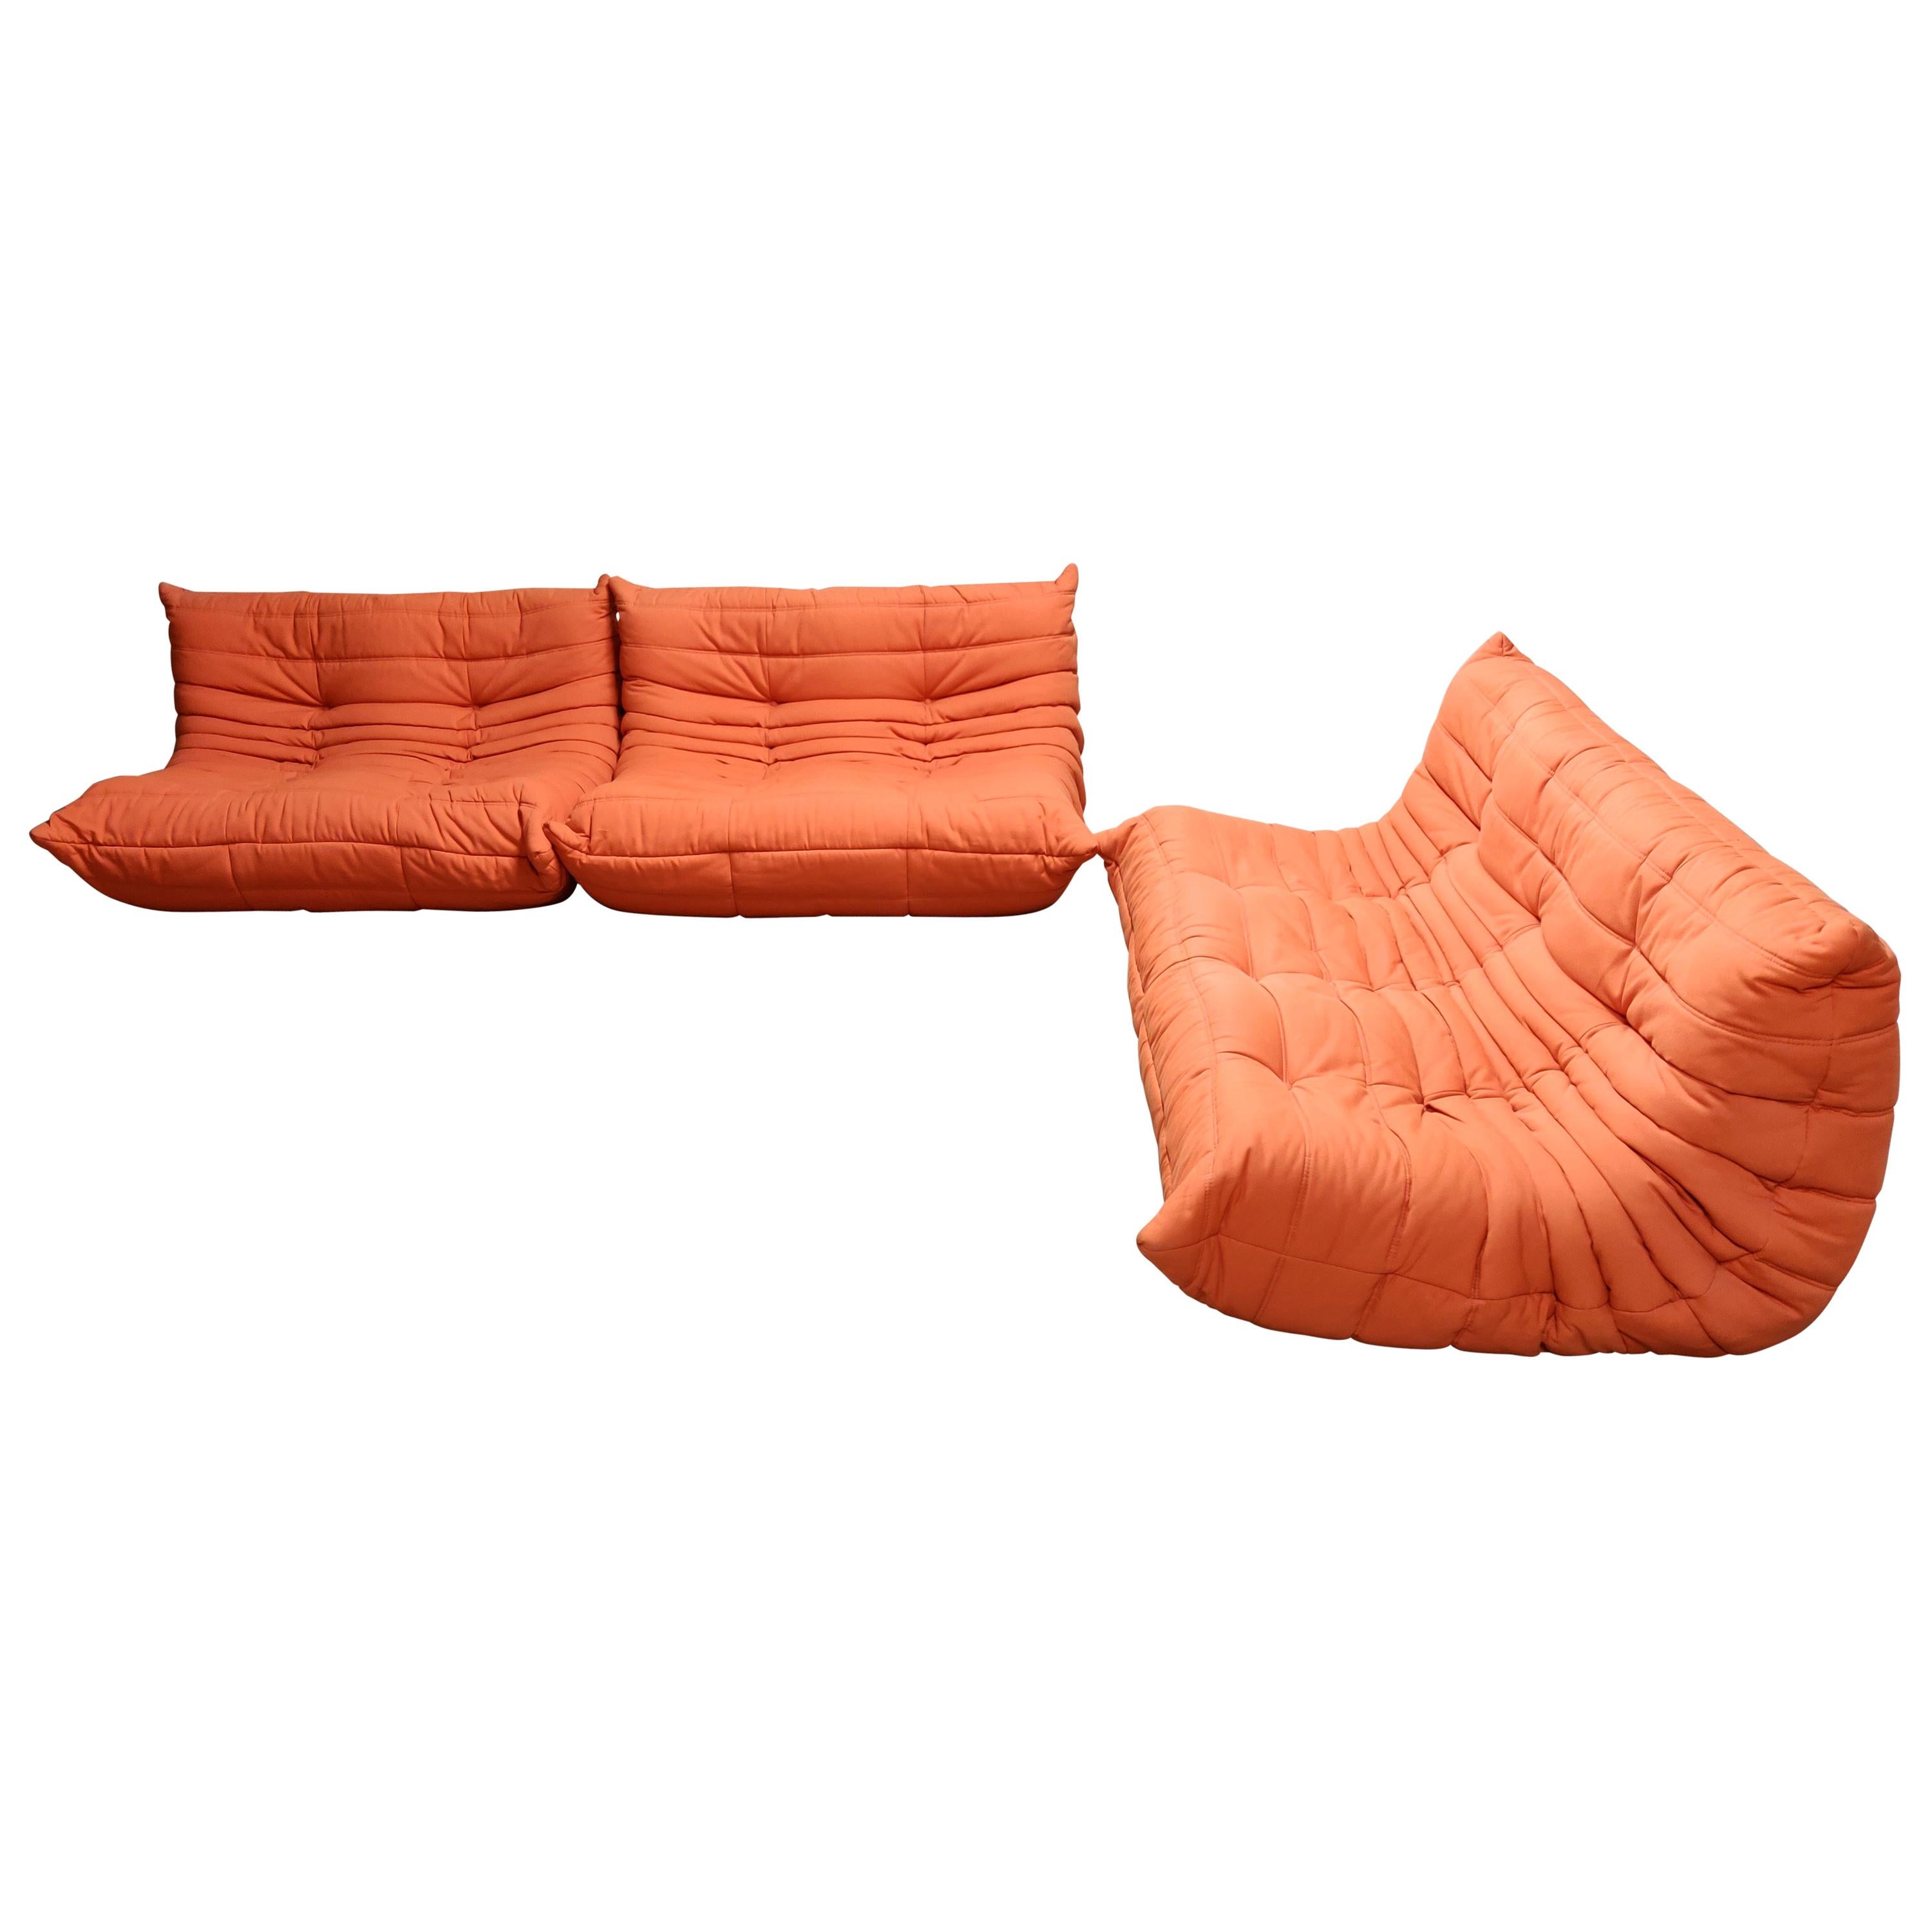 Modular 3-Piece Orange Sofa by Michel Ducaroy for Ligne Roset